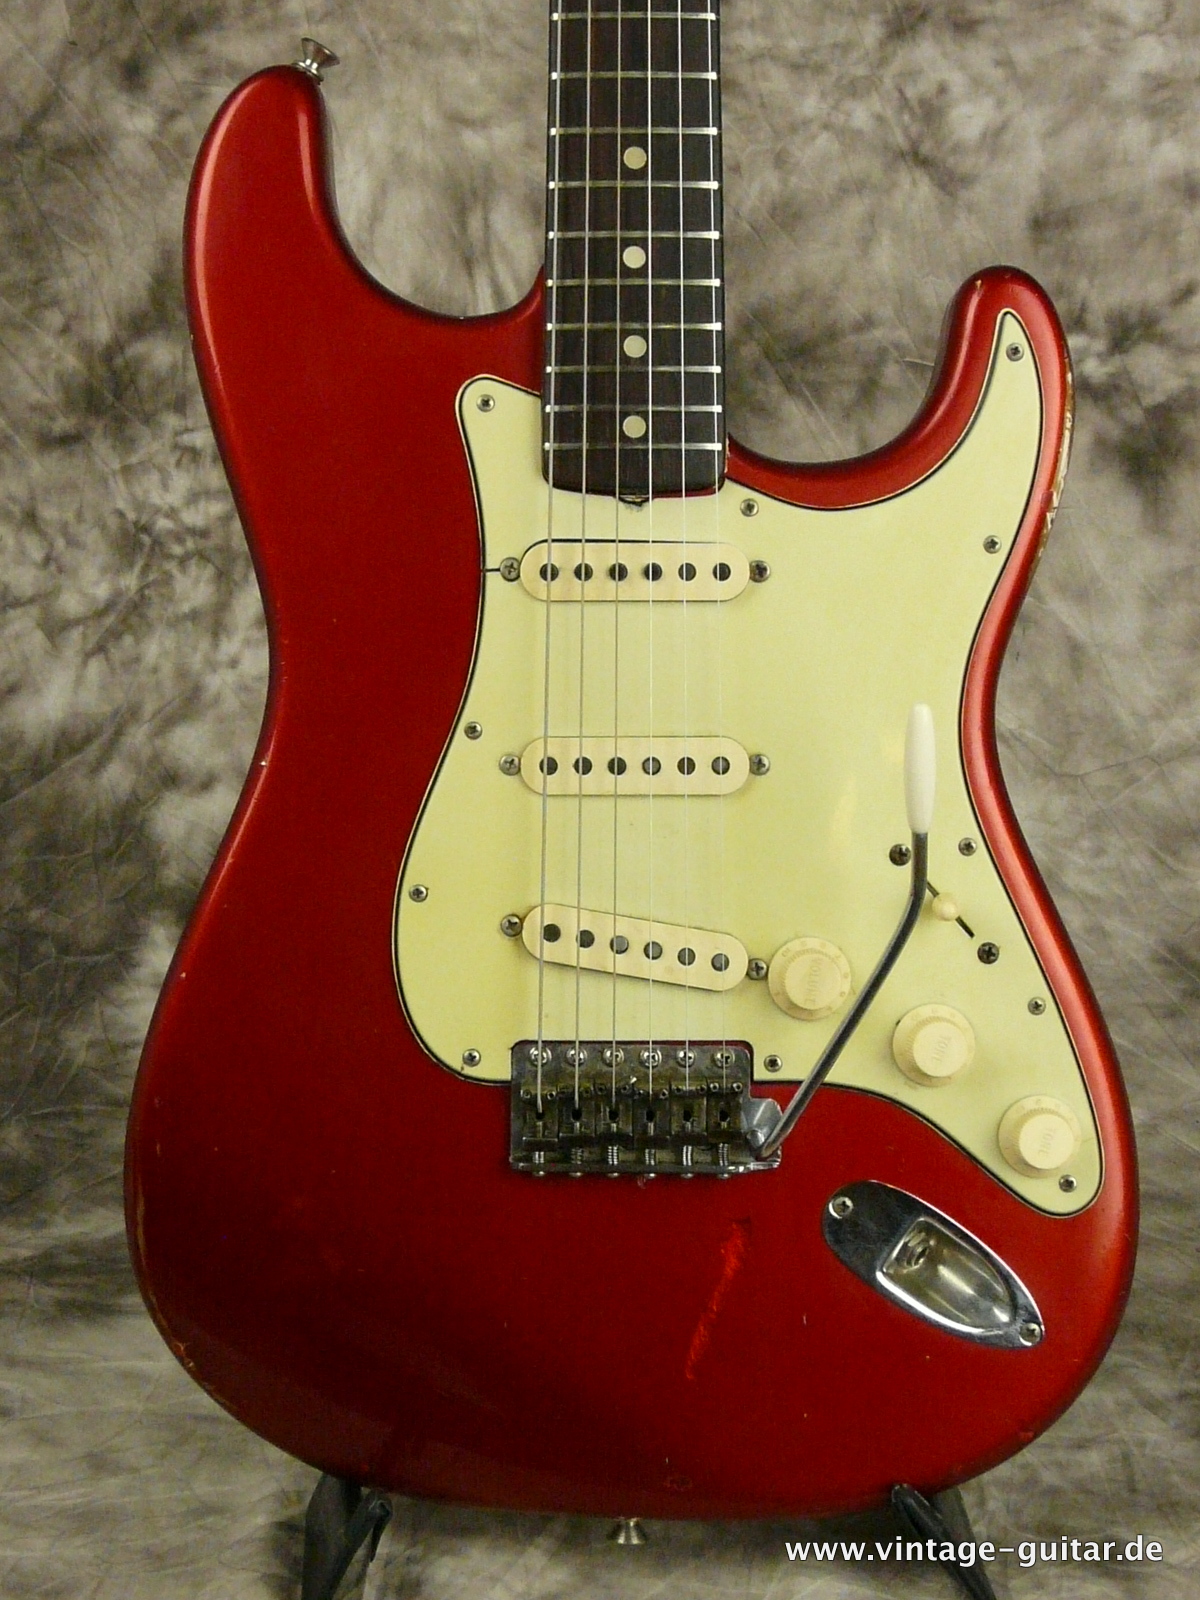 Fender_Stratocaster_candy-apple-red-1964-002.JPG